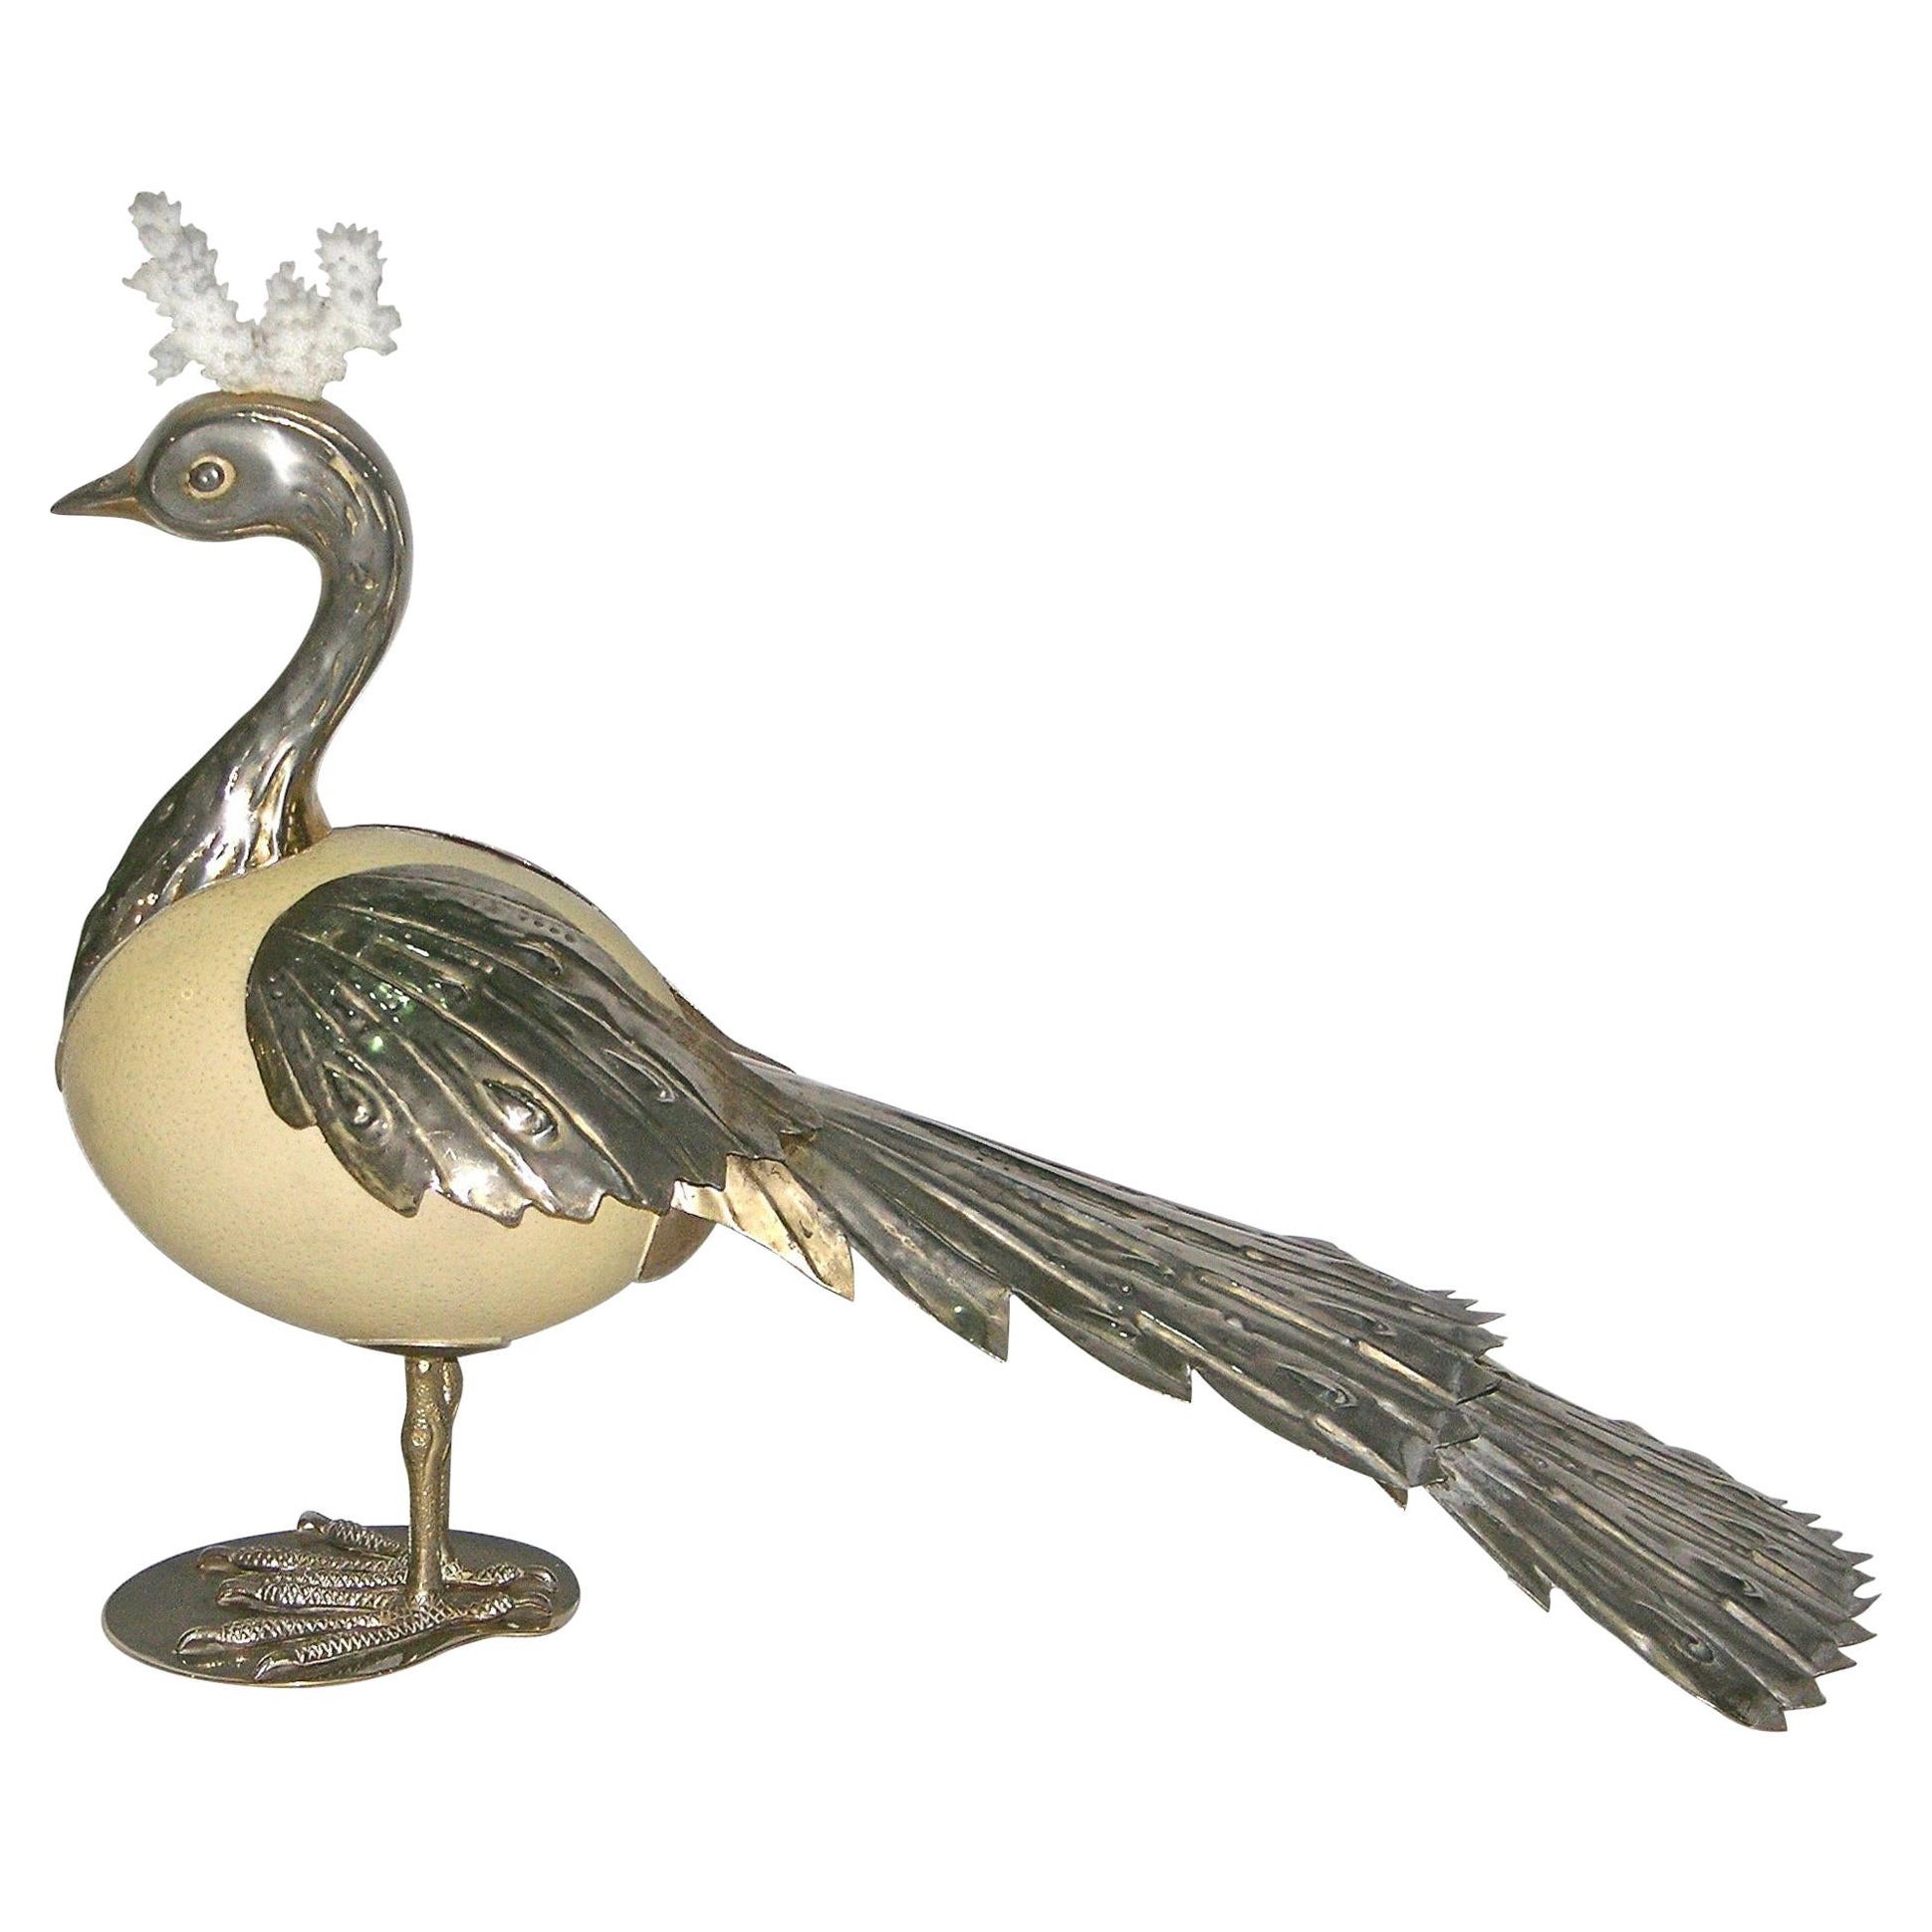 Antonio Pavia 1970s Italian Silver Plated Cream Bird Sculpture with White Crest For Sale